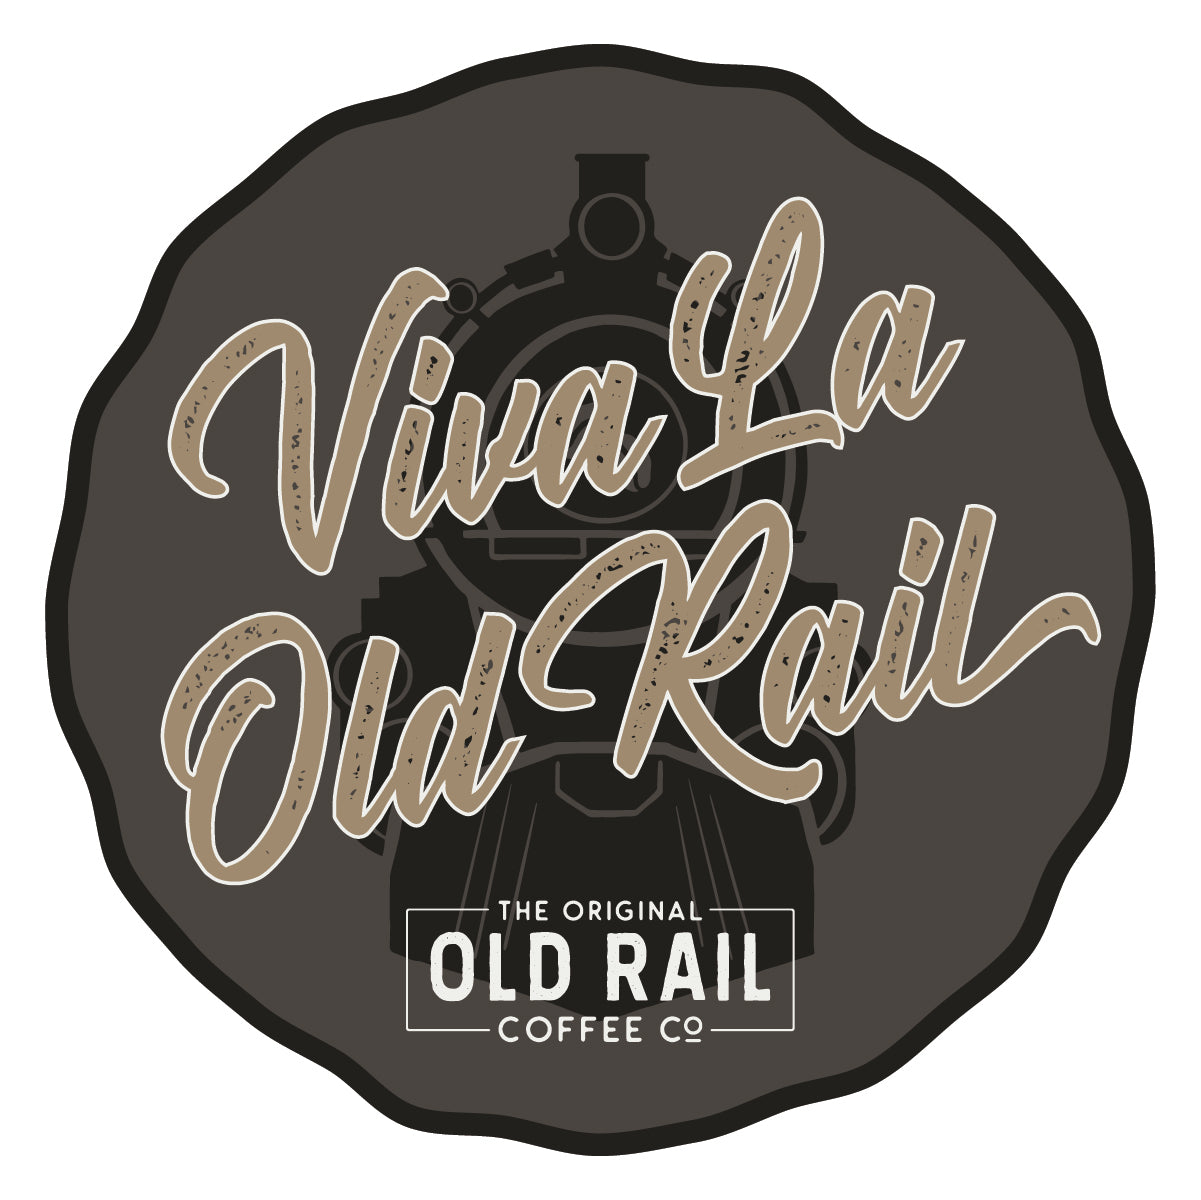 Old Rail Coffee Co, Viva La Old Rail Sticker, Circle Sticker, Dark